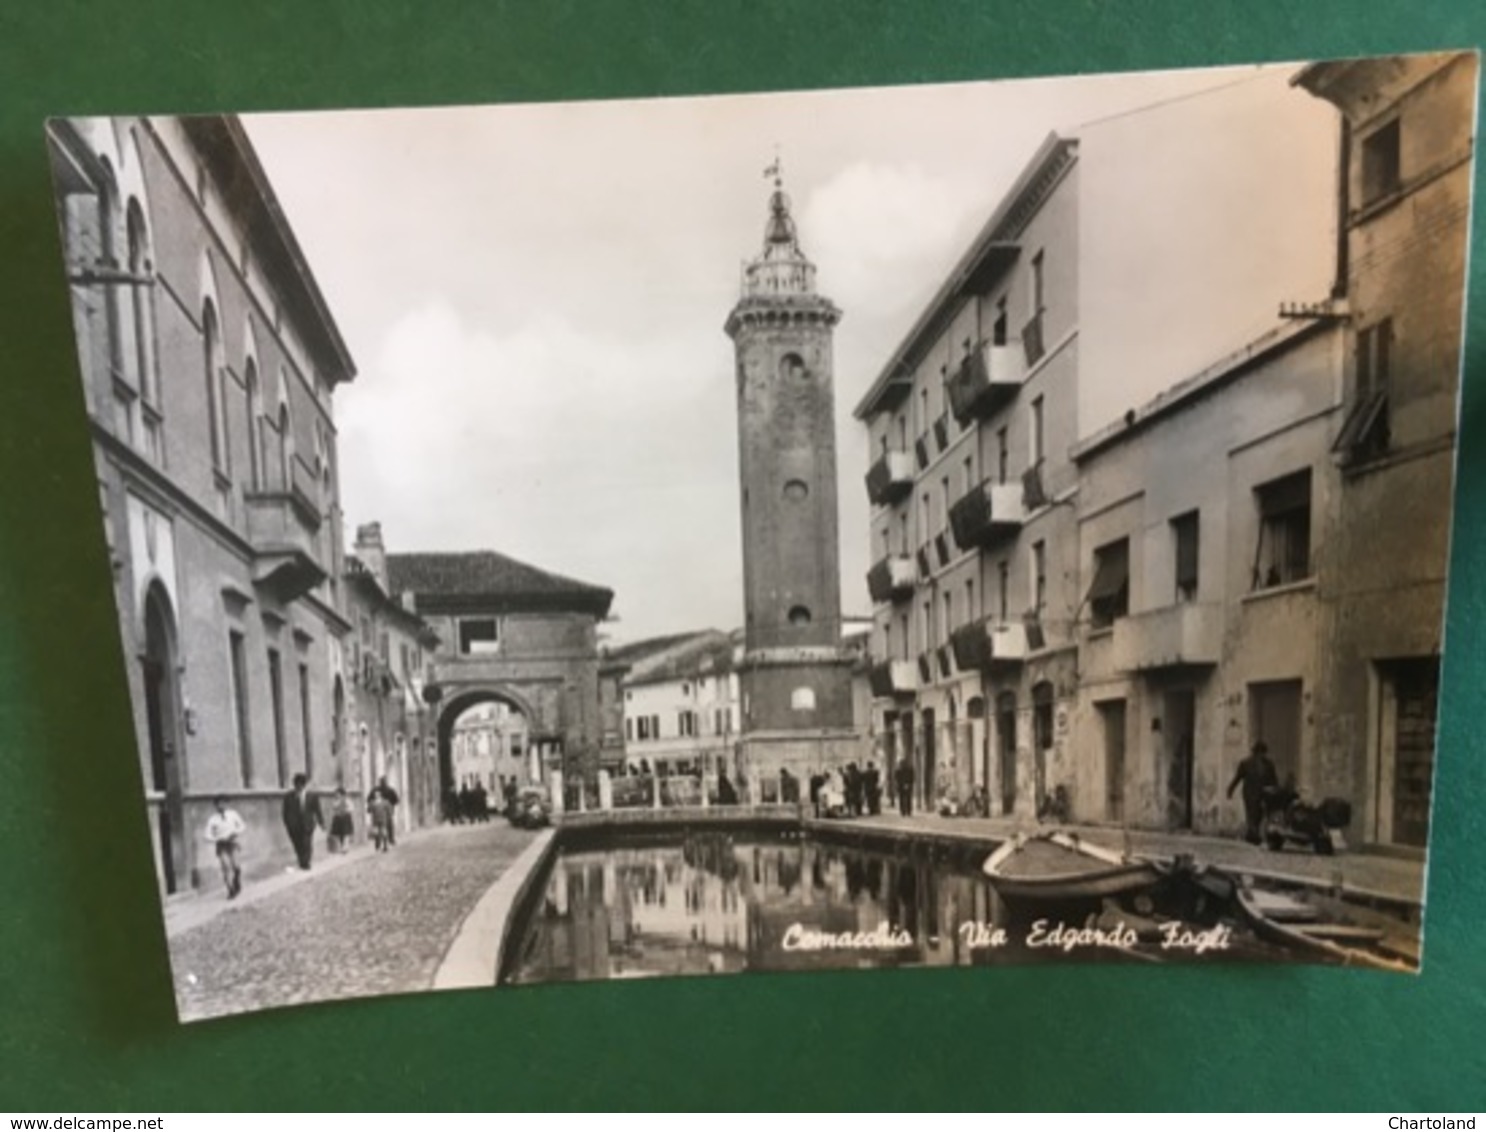 Cartolina Comacchio - Via Edoardo Fogli - 1960 Ca. - Ferrara